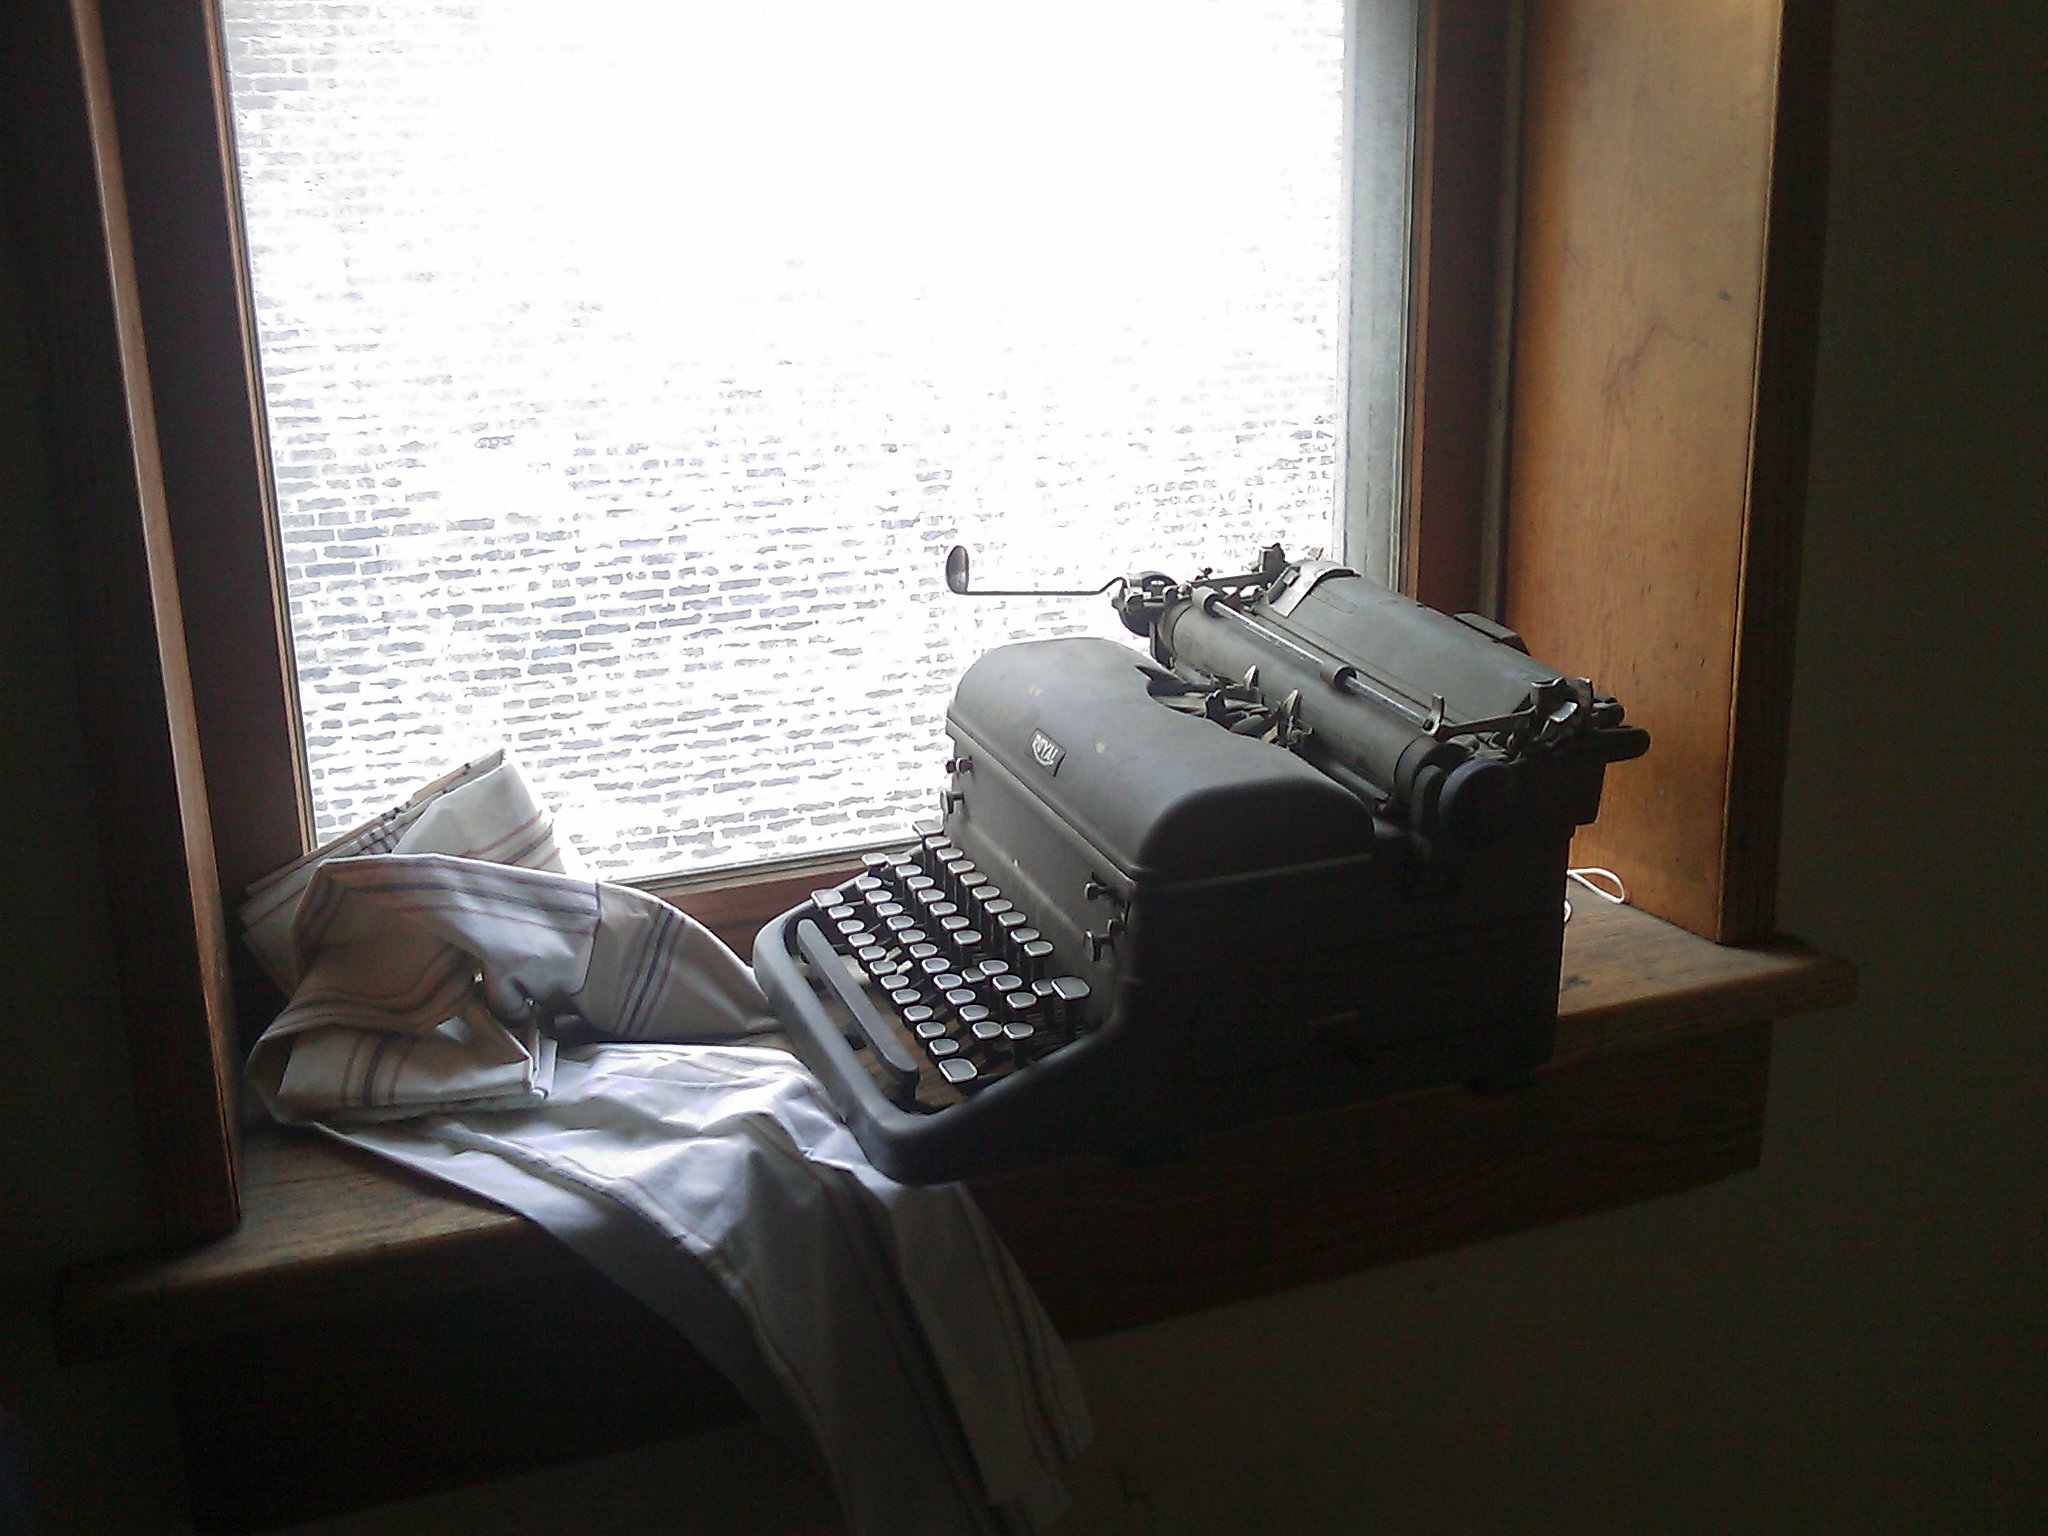 Old Royal typewriter sitting on a windowsill